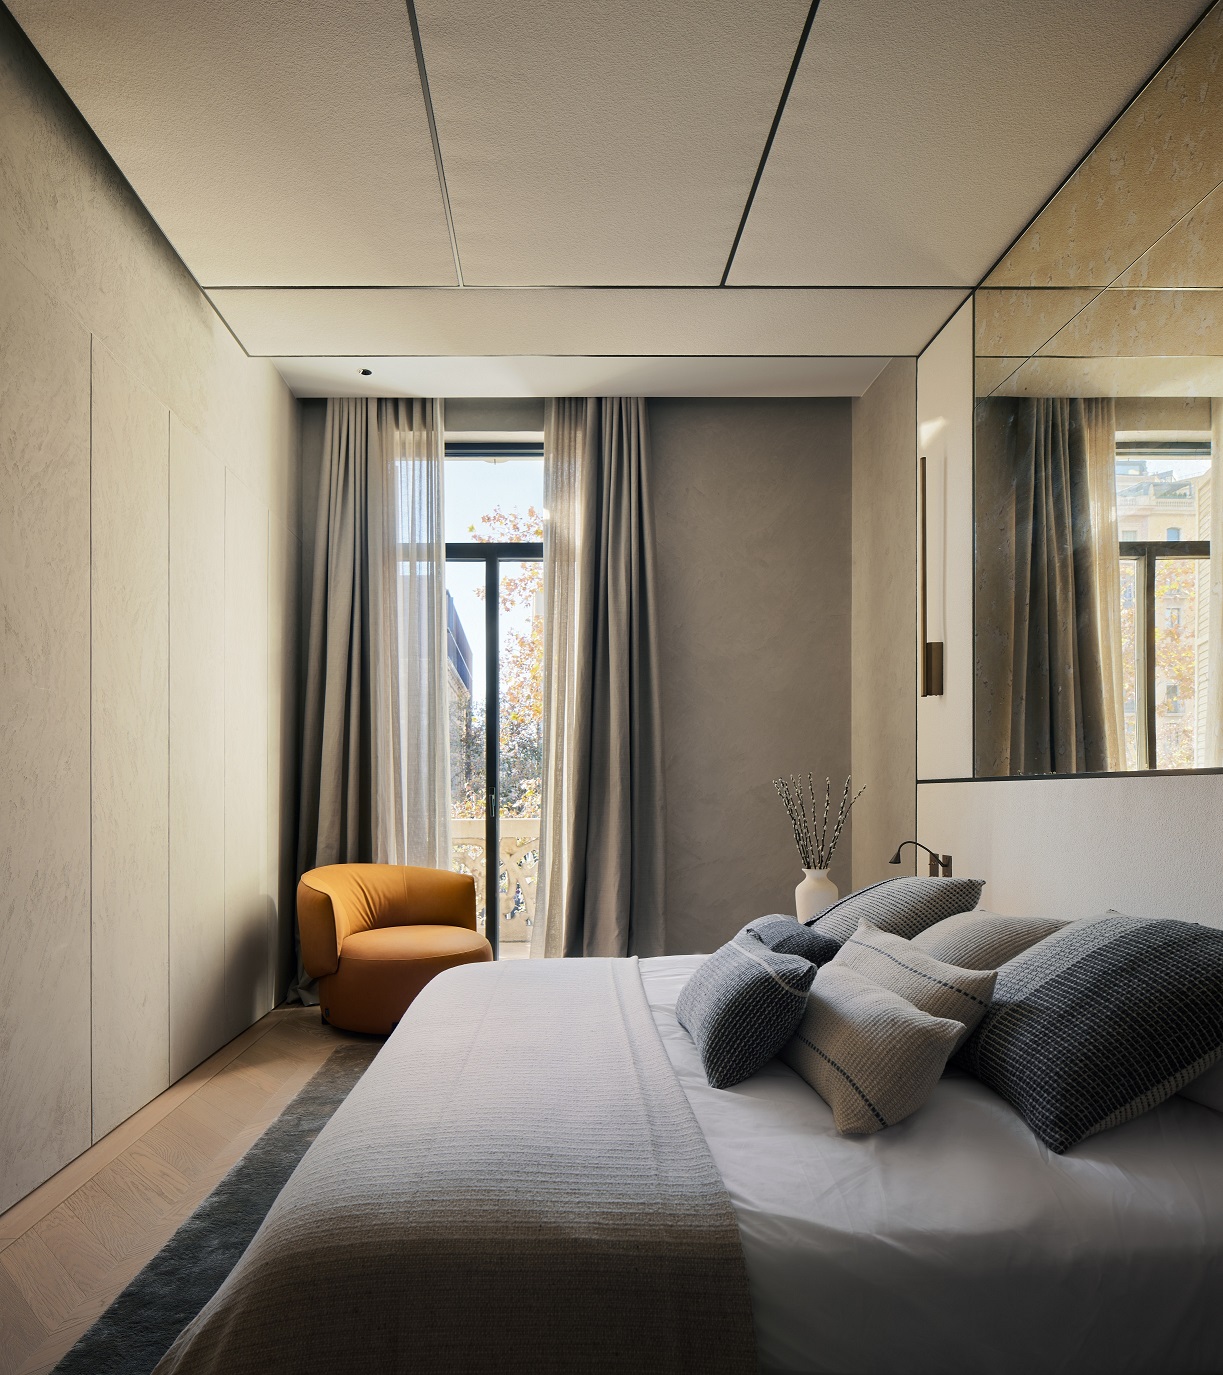 Paseo de Gracia Apartment LUV Studio Pol Viladoms Master Bedroom 1 - LUV Studio - Architecture et design - Barcelone